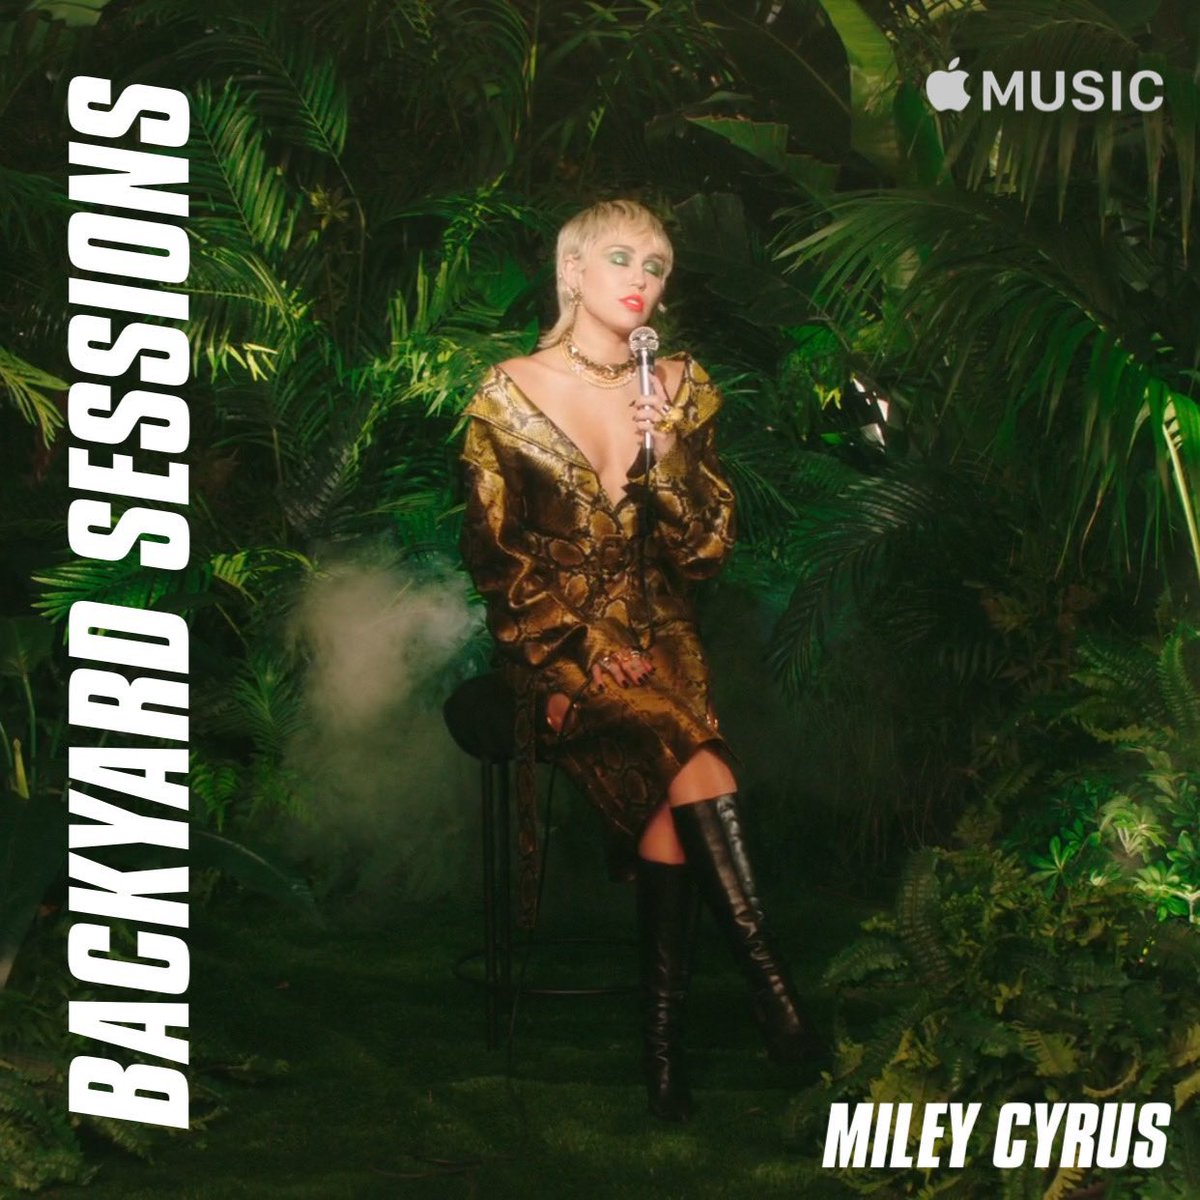 🎸 FIRST 4 #MILEYCYRUS #BACKYARDSESSIONS AUDIO ALBUMS 🎸

The Backyard Sessions (2012): dropbox.com/sh/eaopy8dajfq…

Happy Hippie Presents Backyard Sessions (2015): dropbox.com/sh/vdccuvdqj84…

MTV Unplugged Presents: Miley Cyrus Backyard Sessions (2020): dropbox.com/sh/aoec4mknv9q…

Plastic